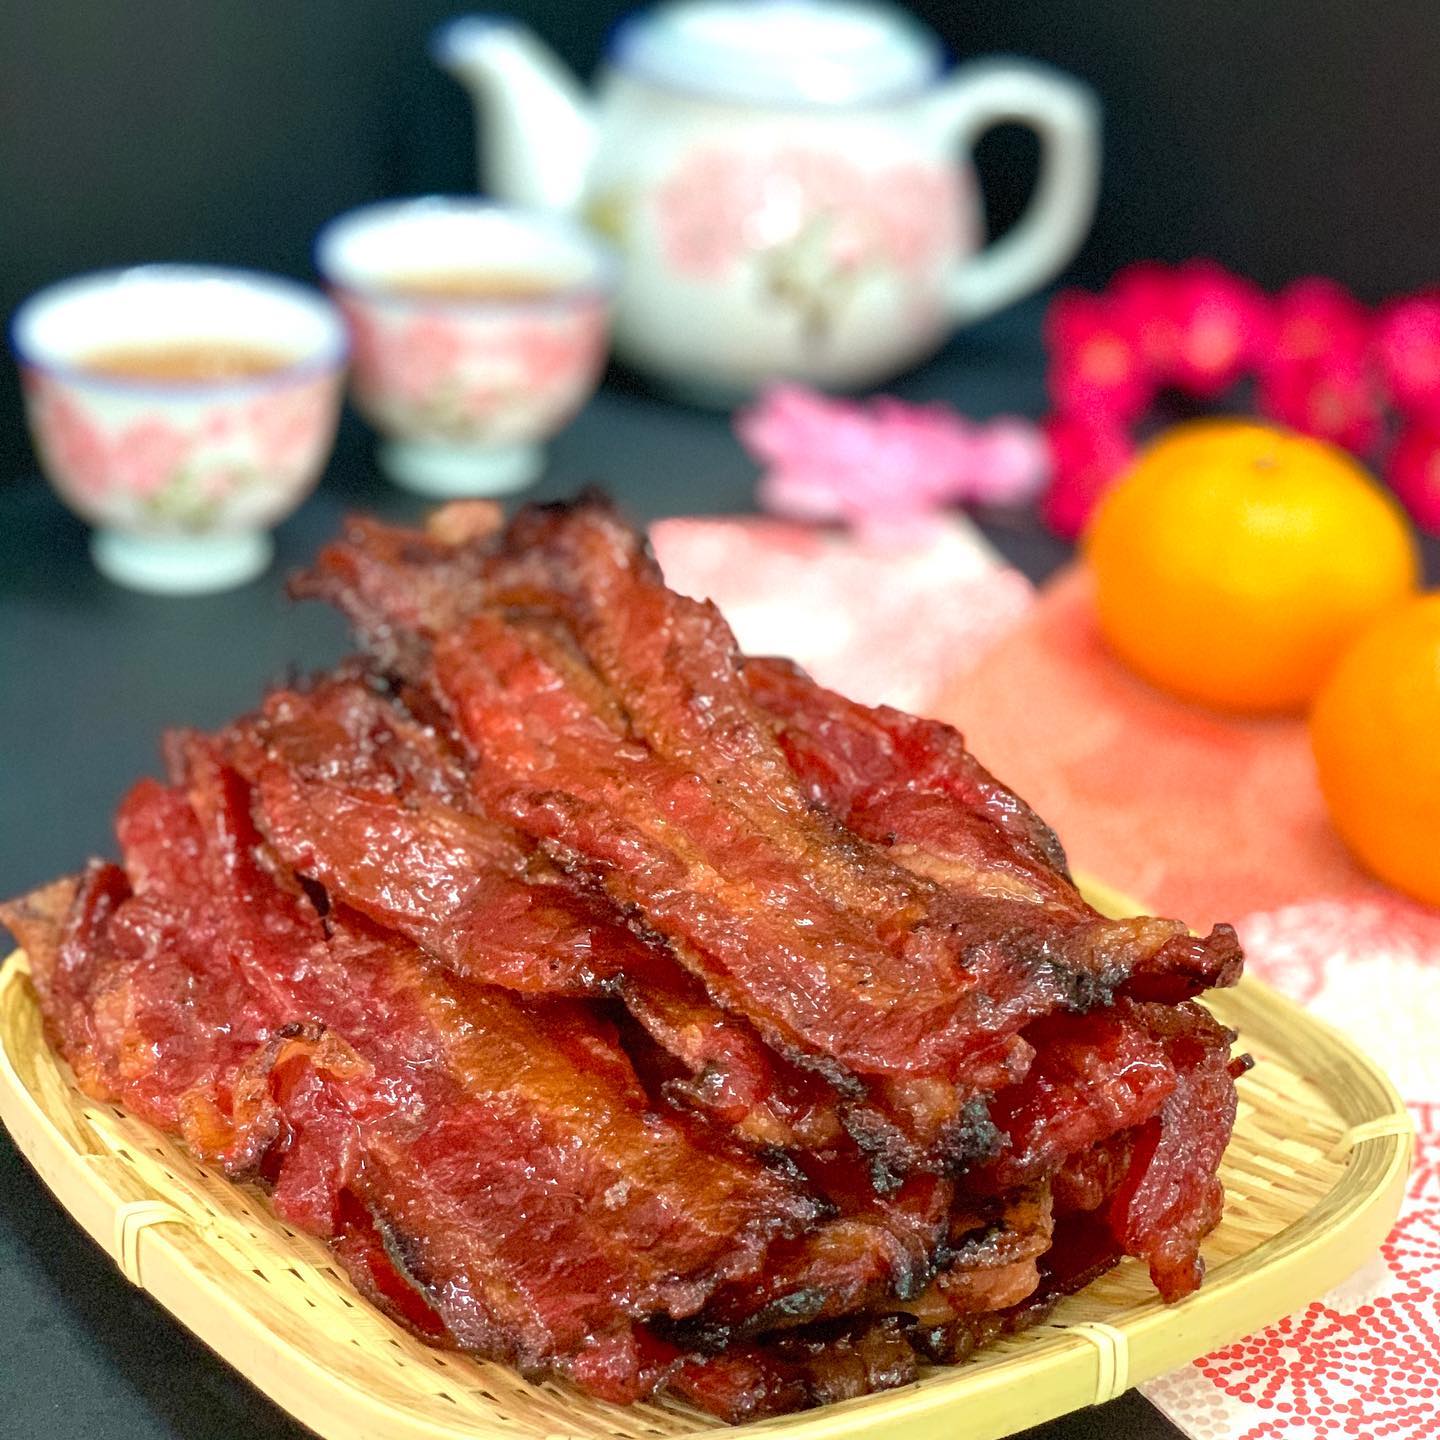 bak kwa in Msia - thin heong bbq honey bacon